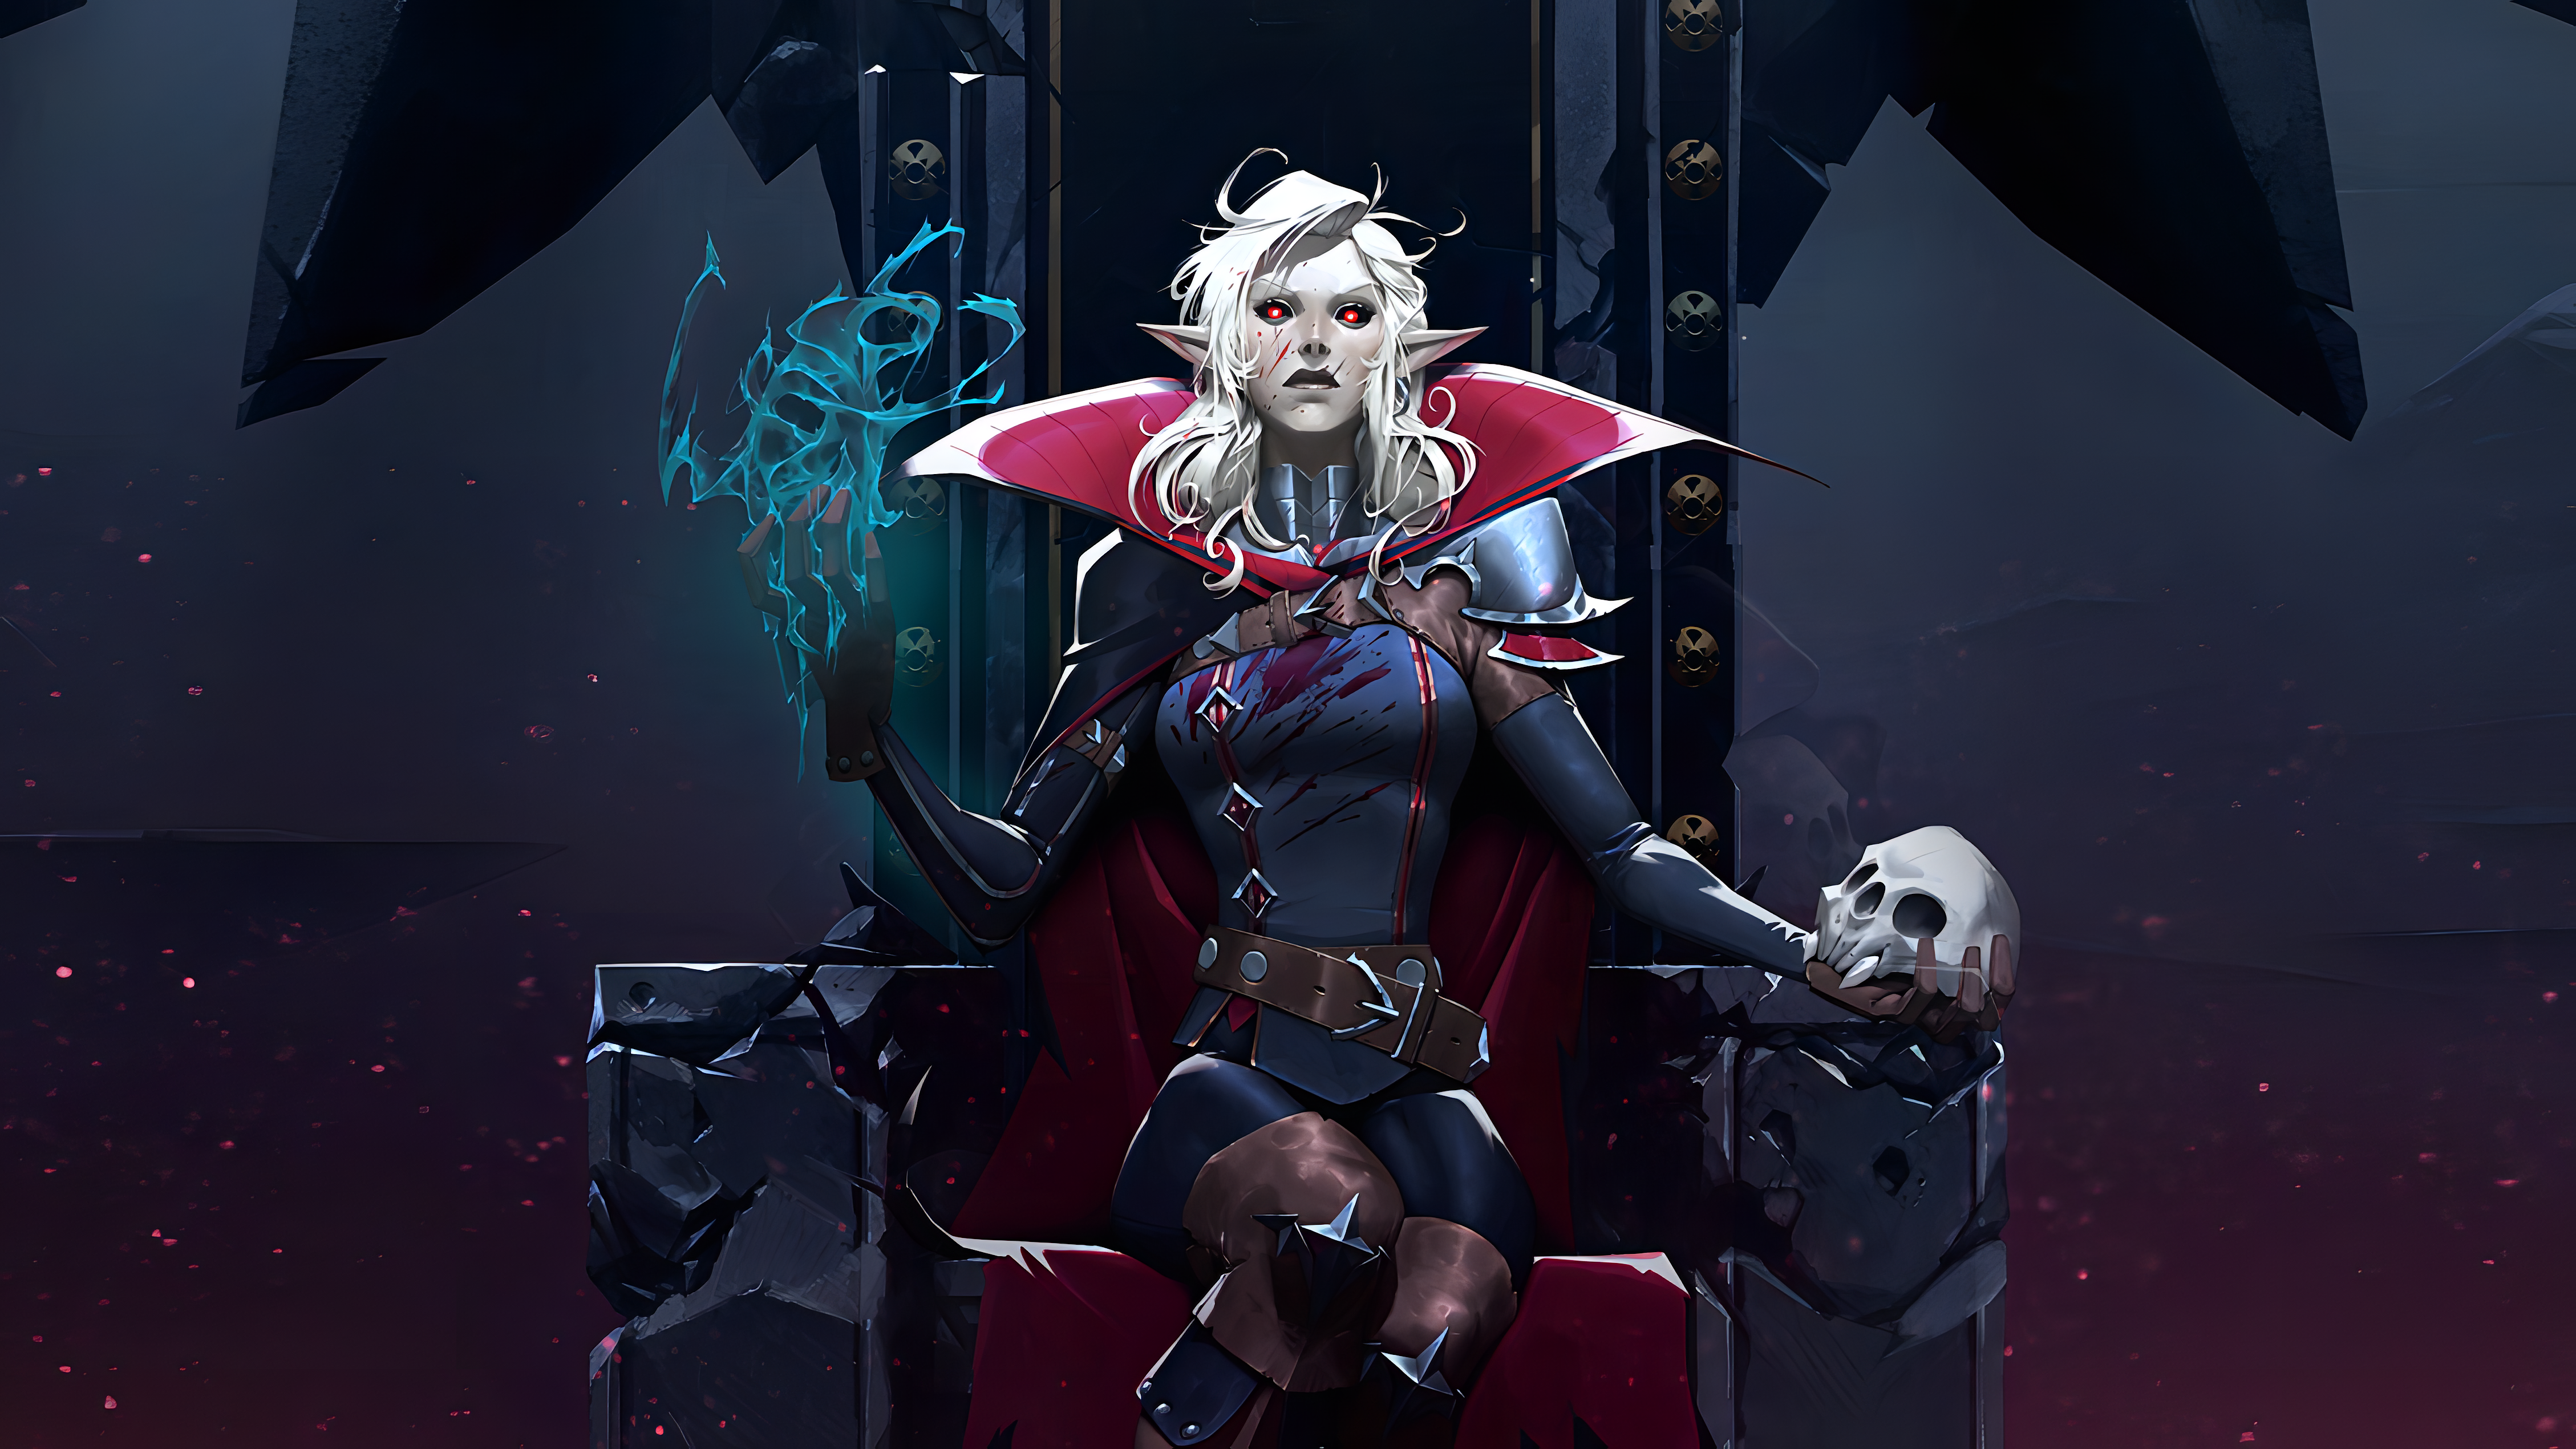 V Rising Gothic Vampire Girl Throne Skull Pointy Ears Sitting Looking At Viewer Digital Art 4516x2540